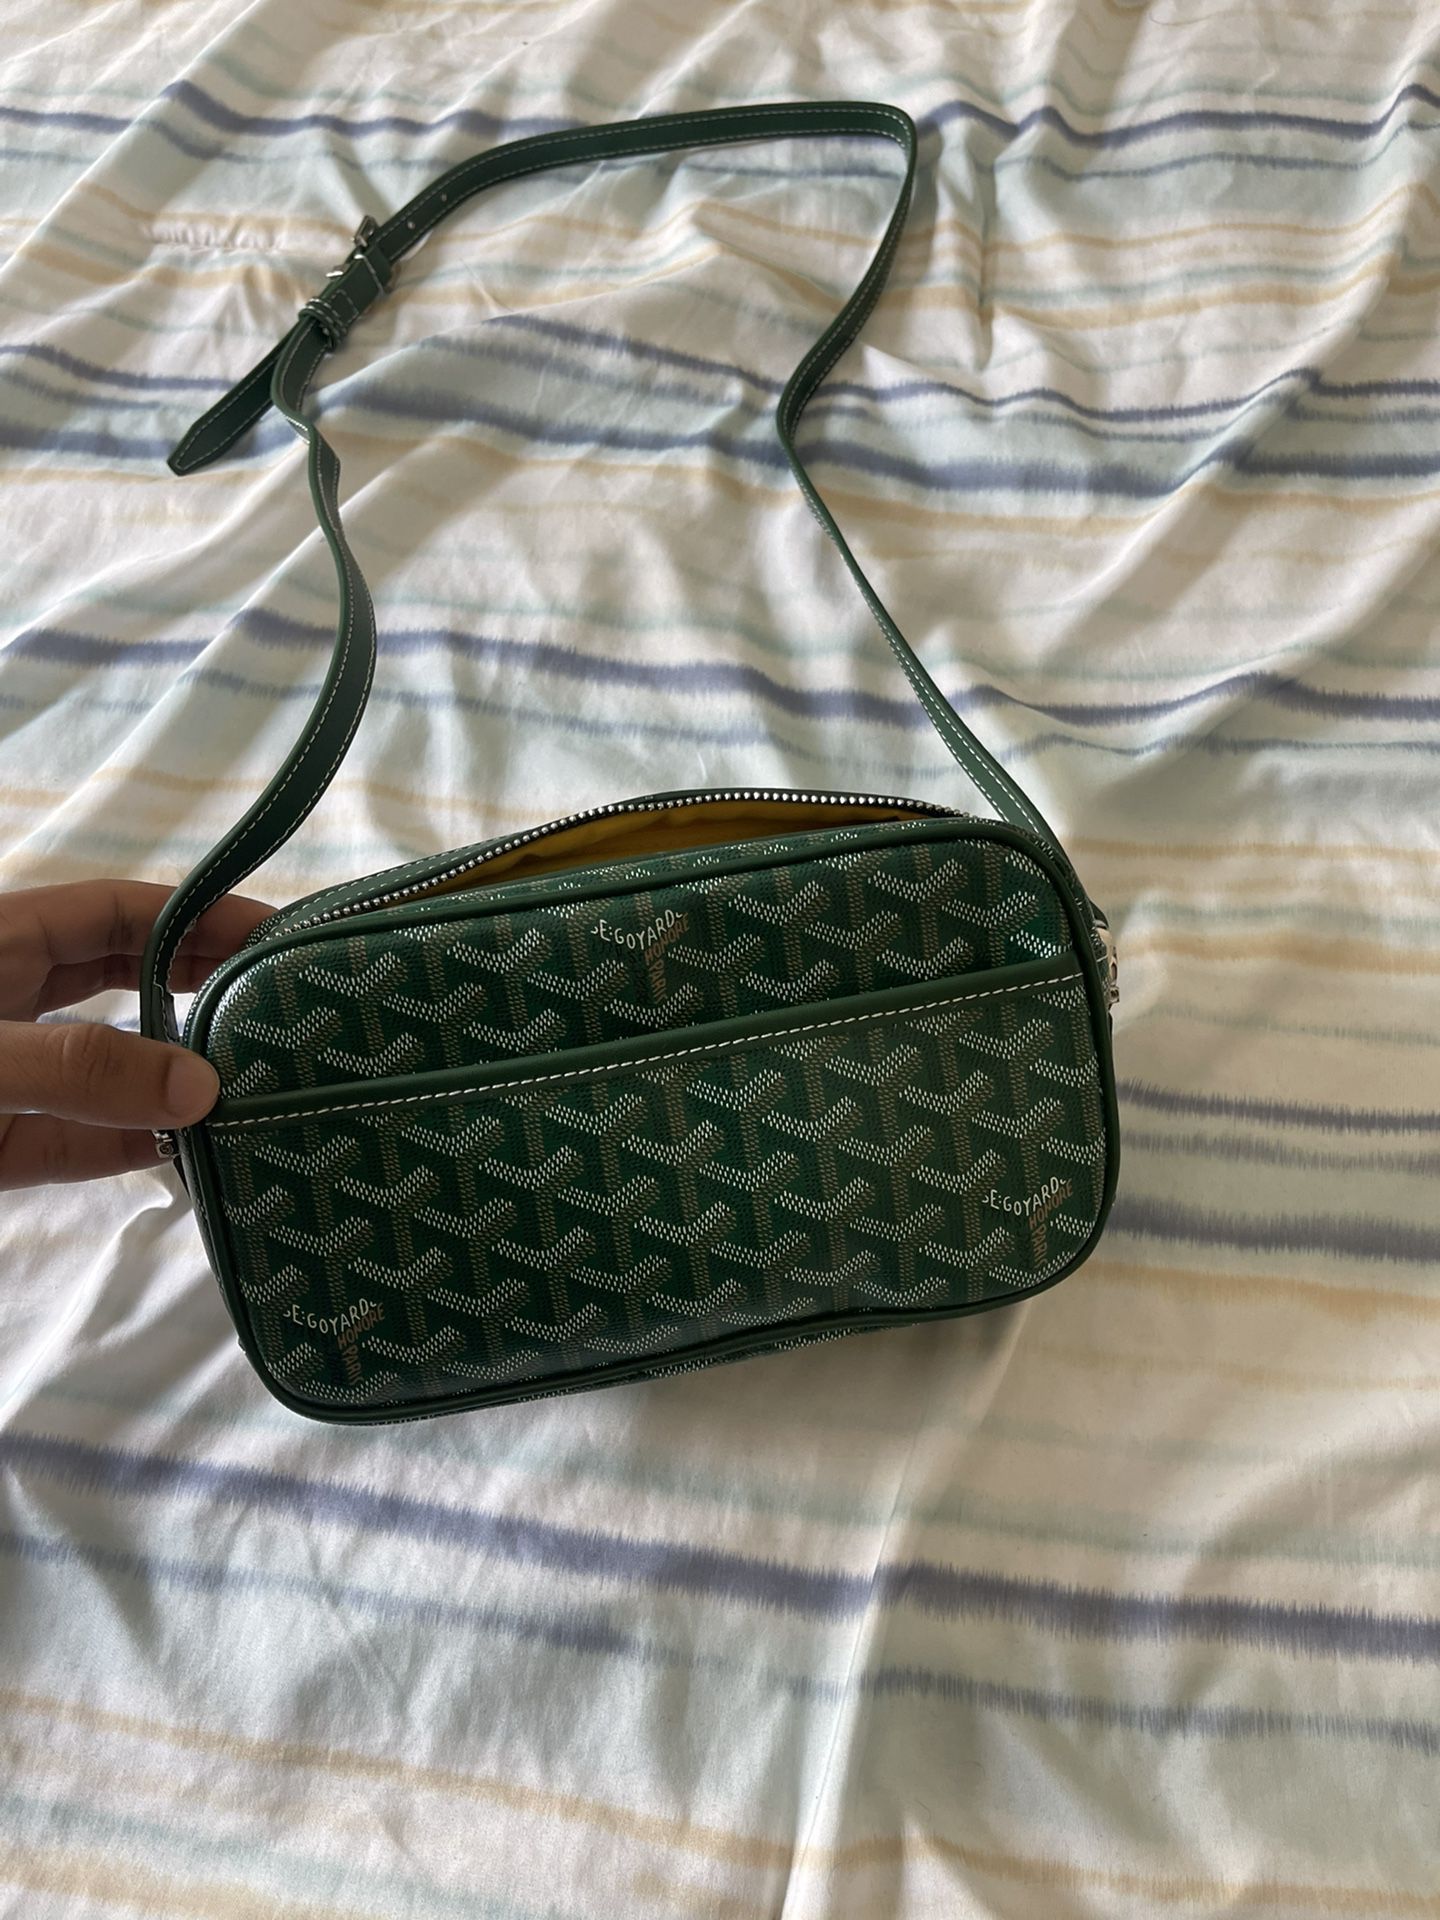 Goyard Messenger Bag Cap-Vert PM Bag Green for Sale in Riverside